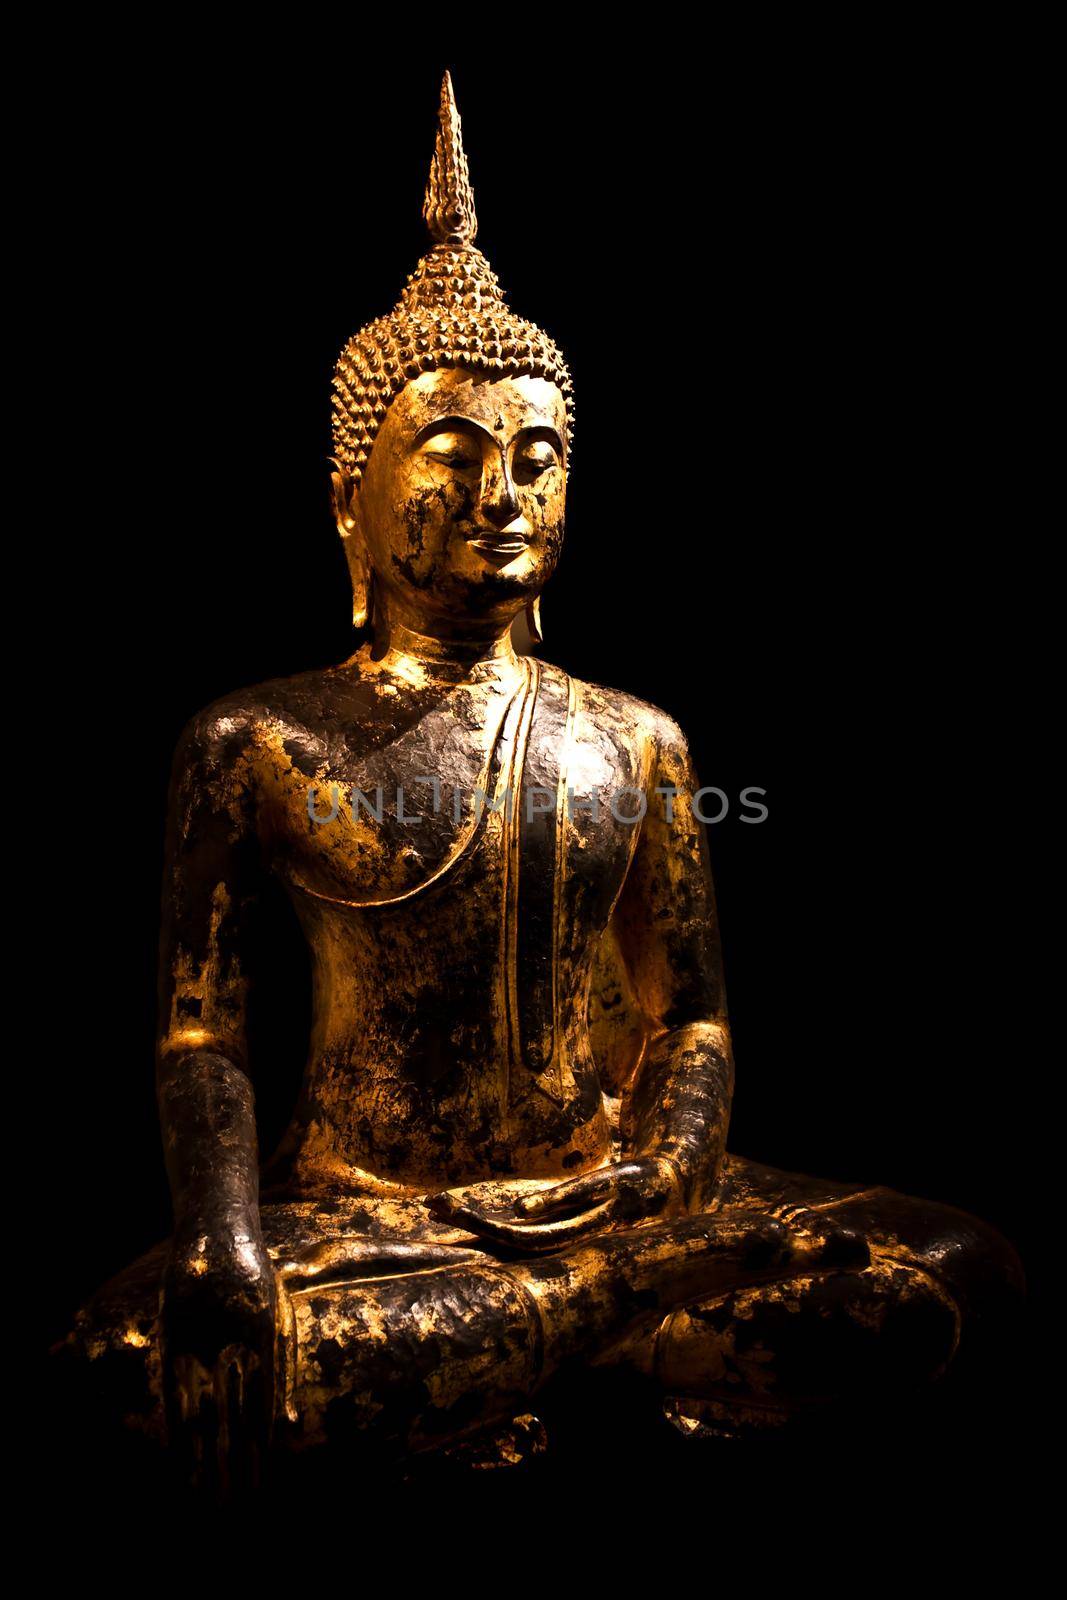 Sitting Bodhisattva in meditation, 2nd century A.C. by Perseomedusa